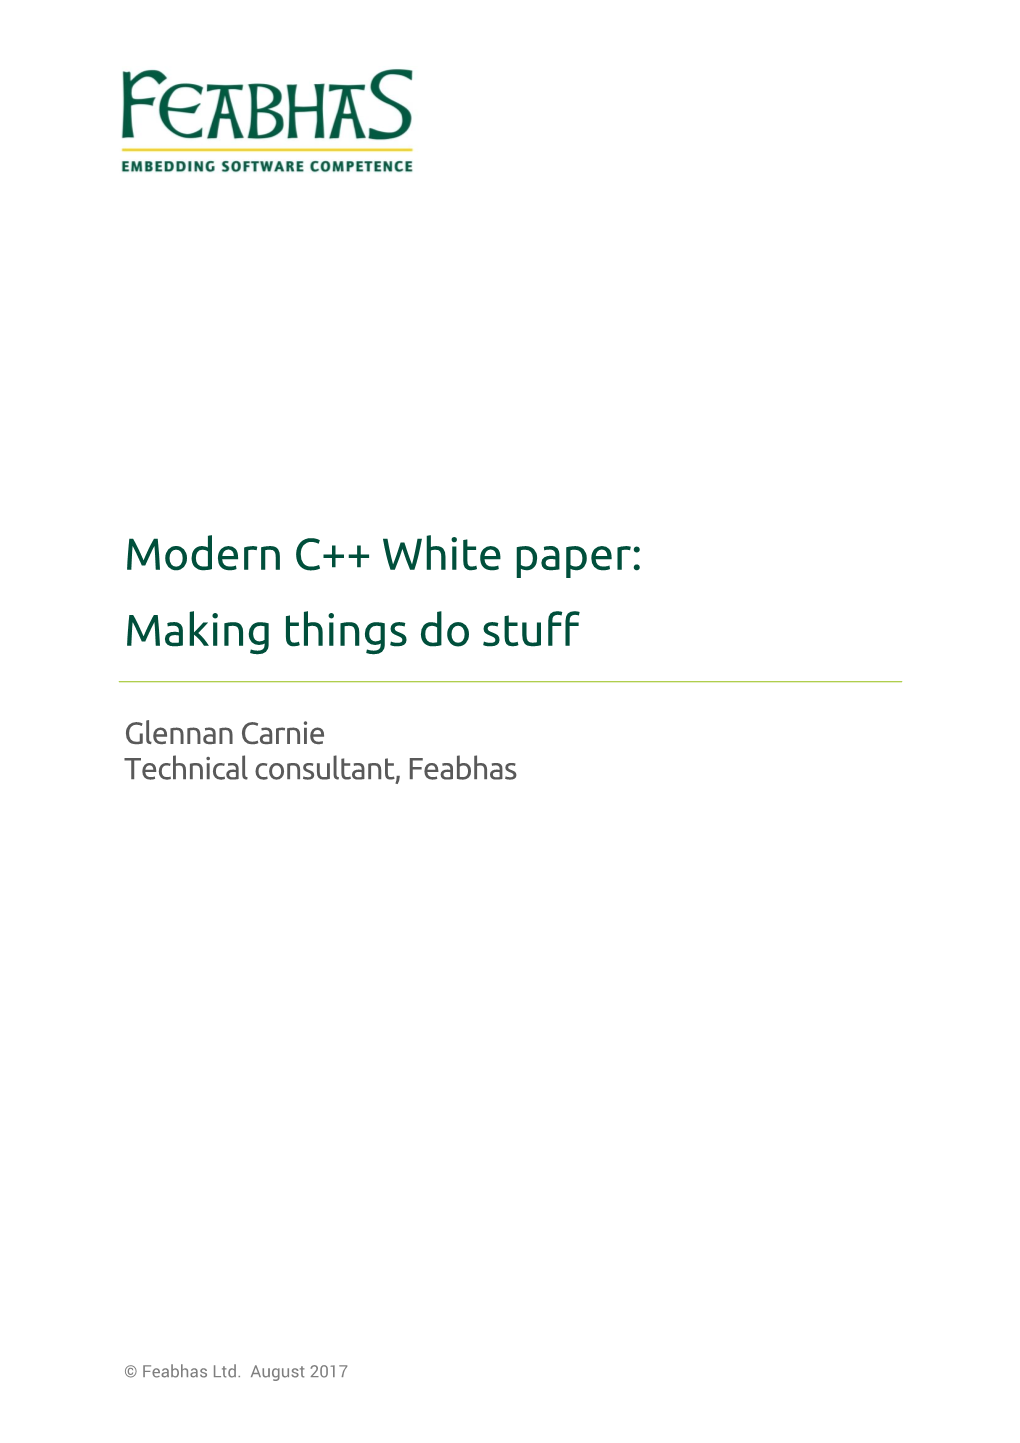 Modern C++ White Paper: Making Things Do Stuff